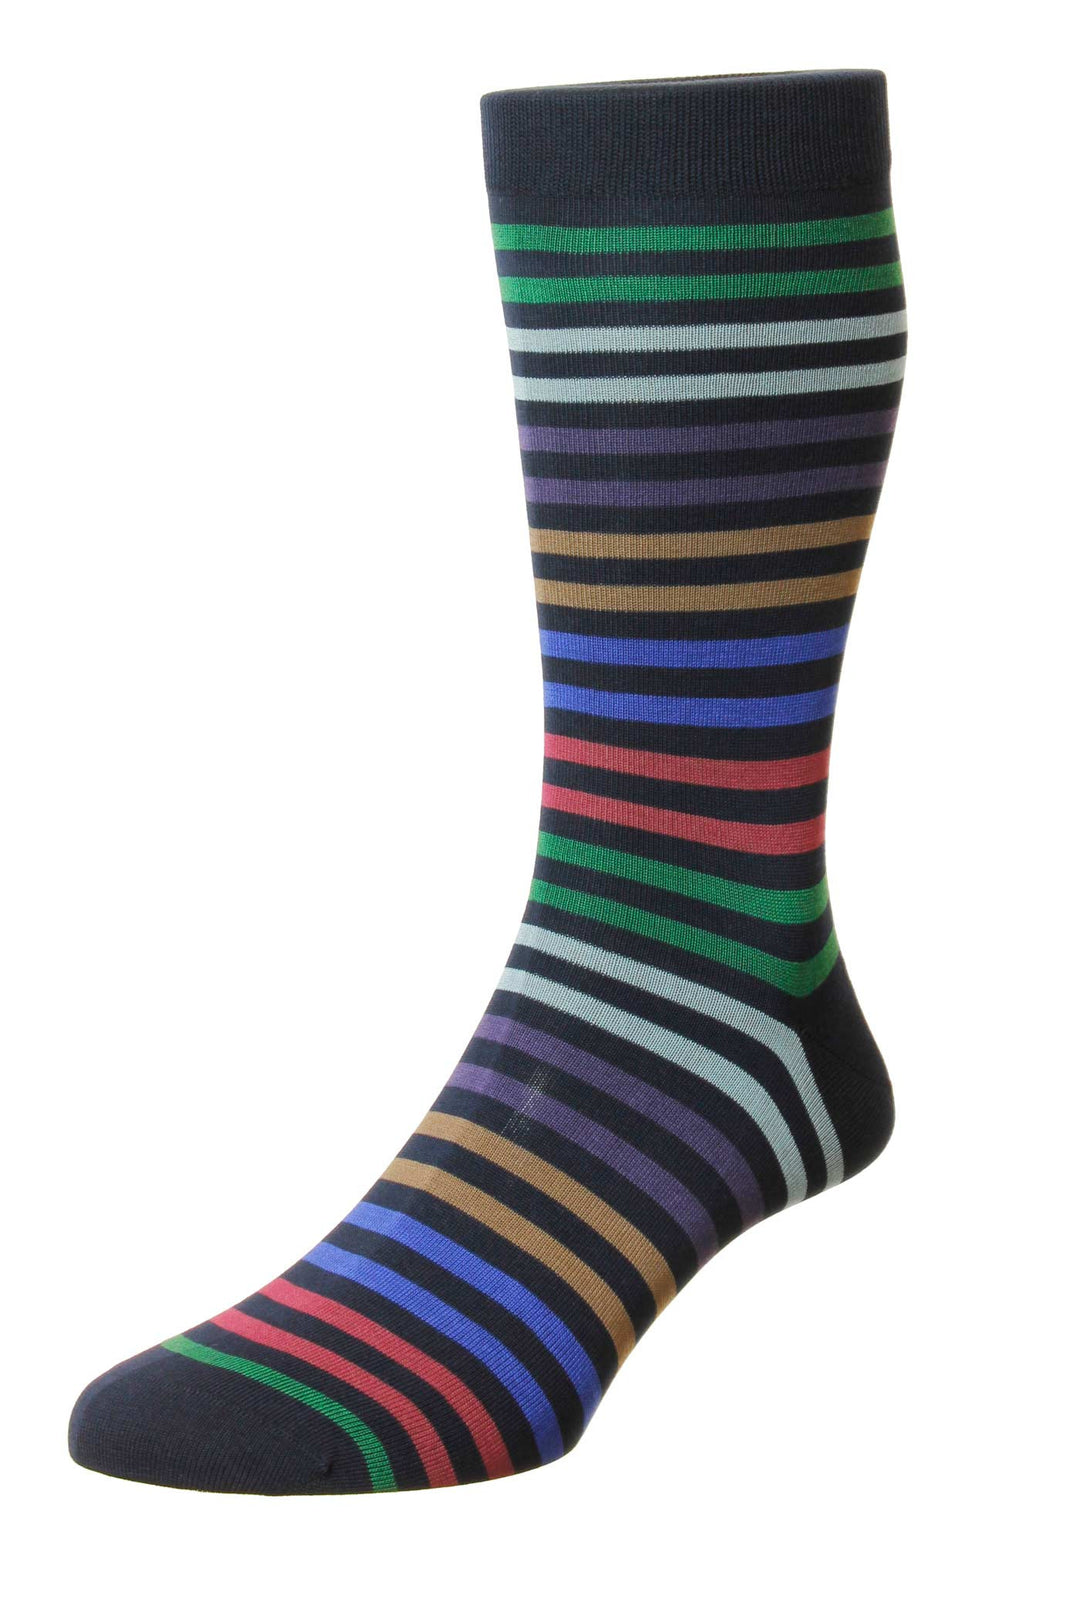 Kilburn Stripe Cotton Lisle Socks